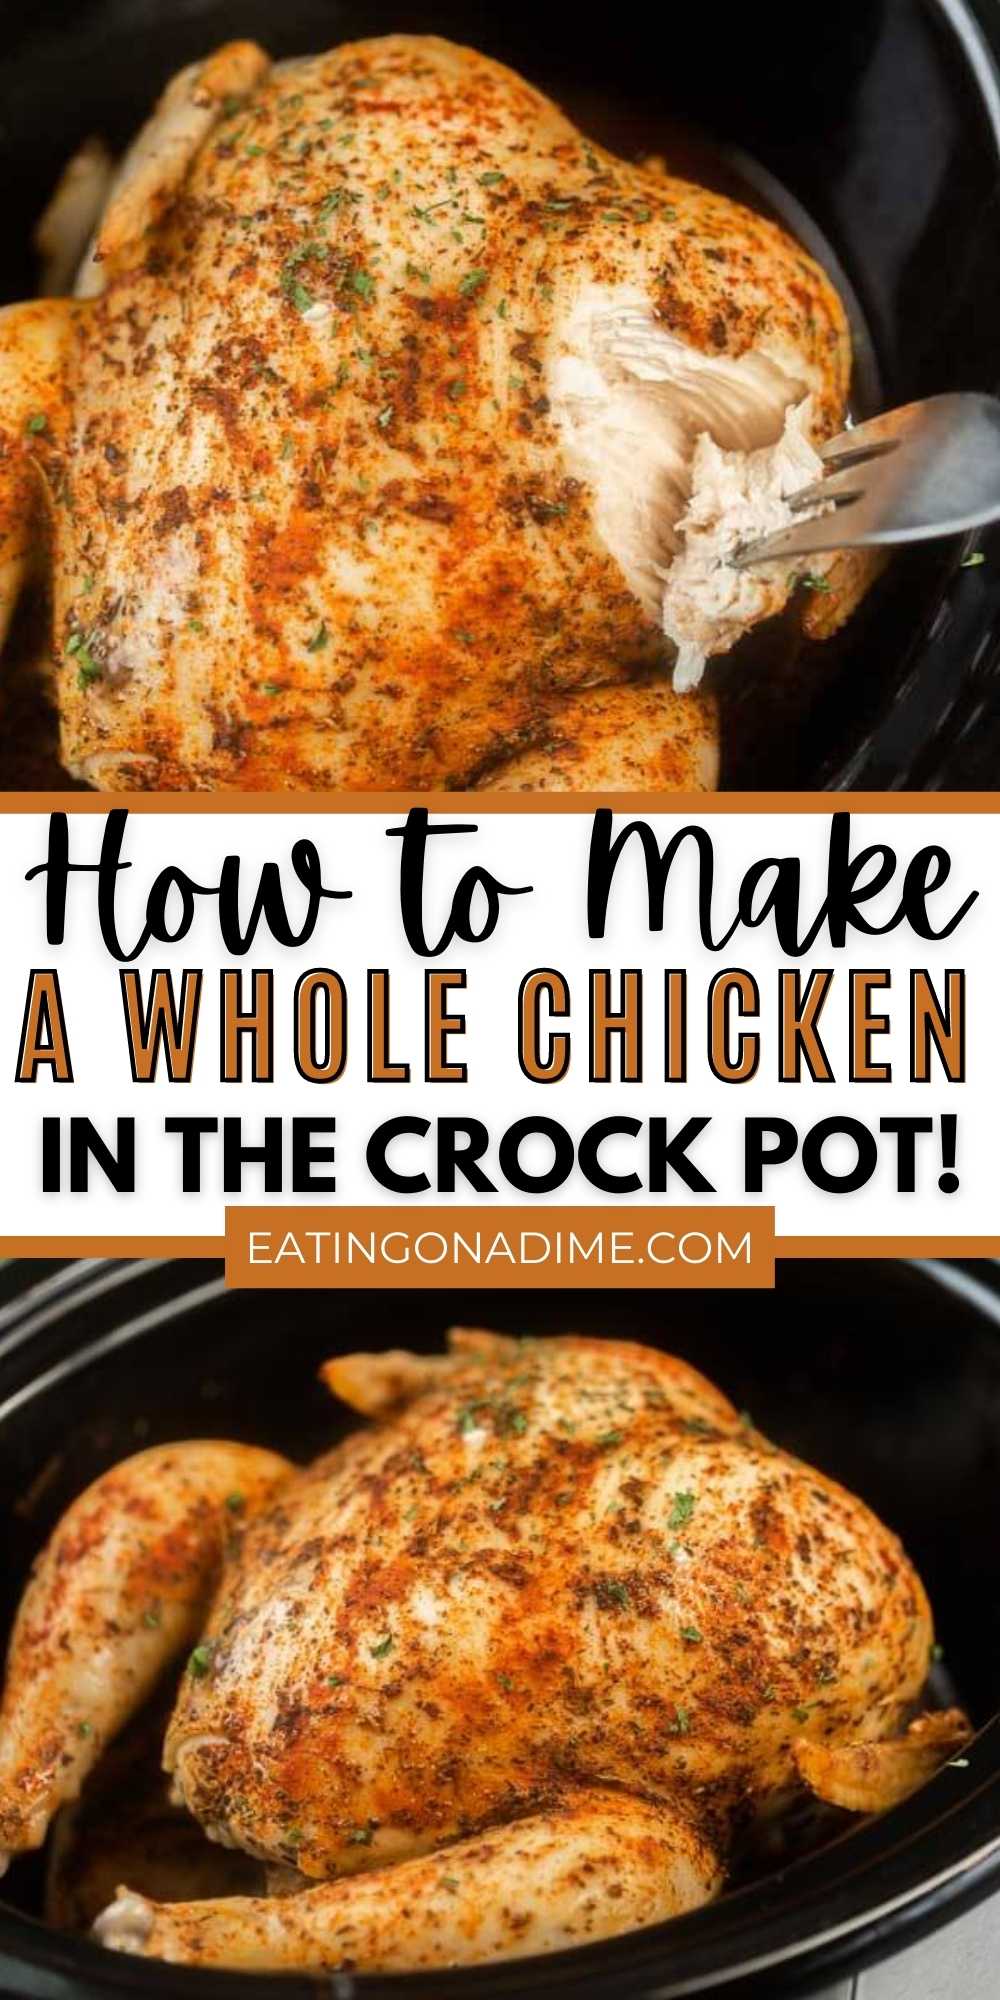 https://www.eatingonadime.com/wp-content/uploads/2021/05/Crock-Pot-Whole-Chicken-Pin-3.jpg